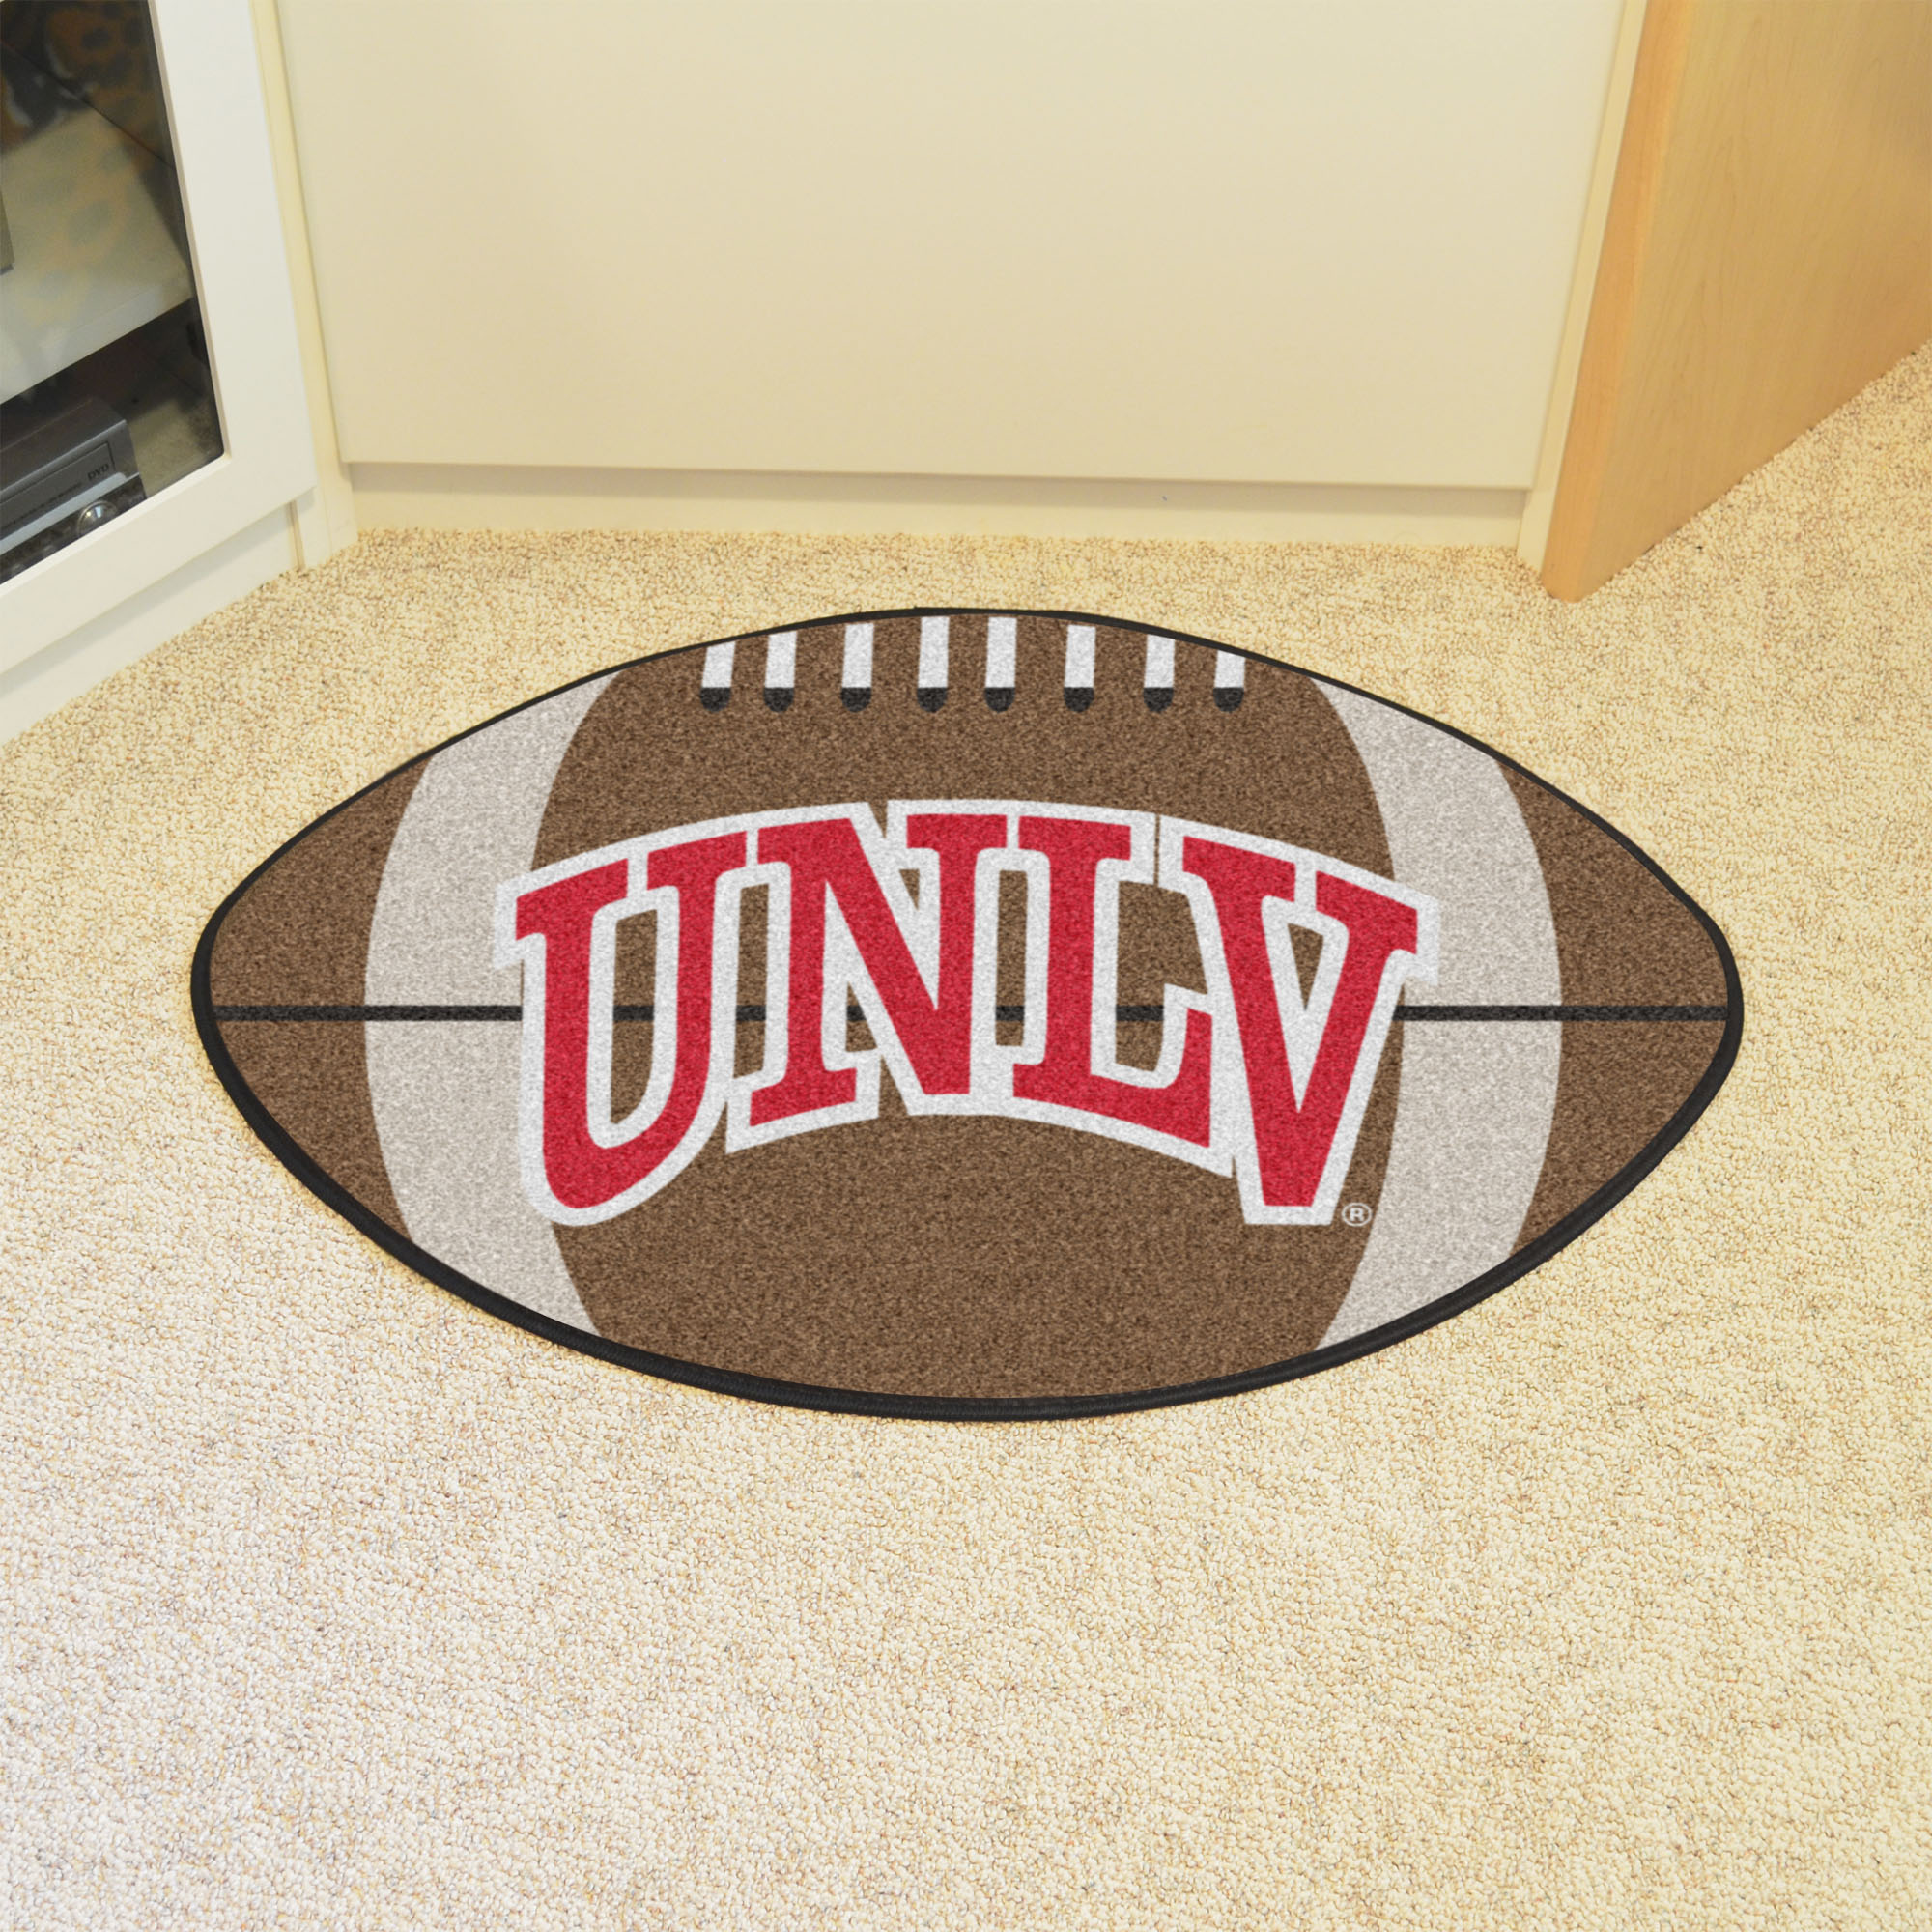 University of Nevada Las Vegas Ball Shaped Area rugs (Ball Shaped Area Rugs: Football)